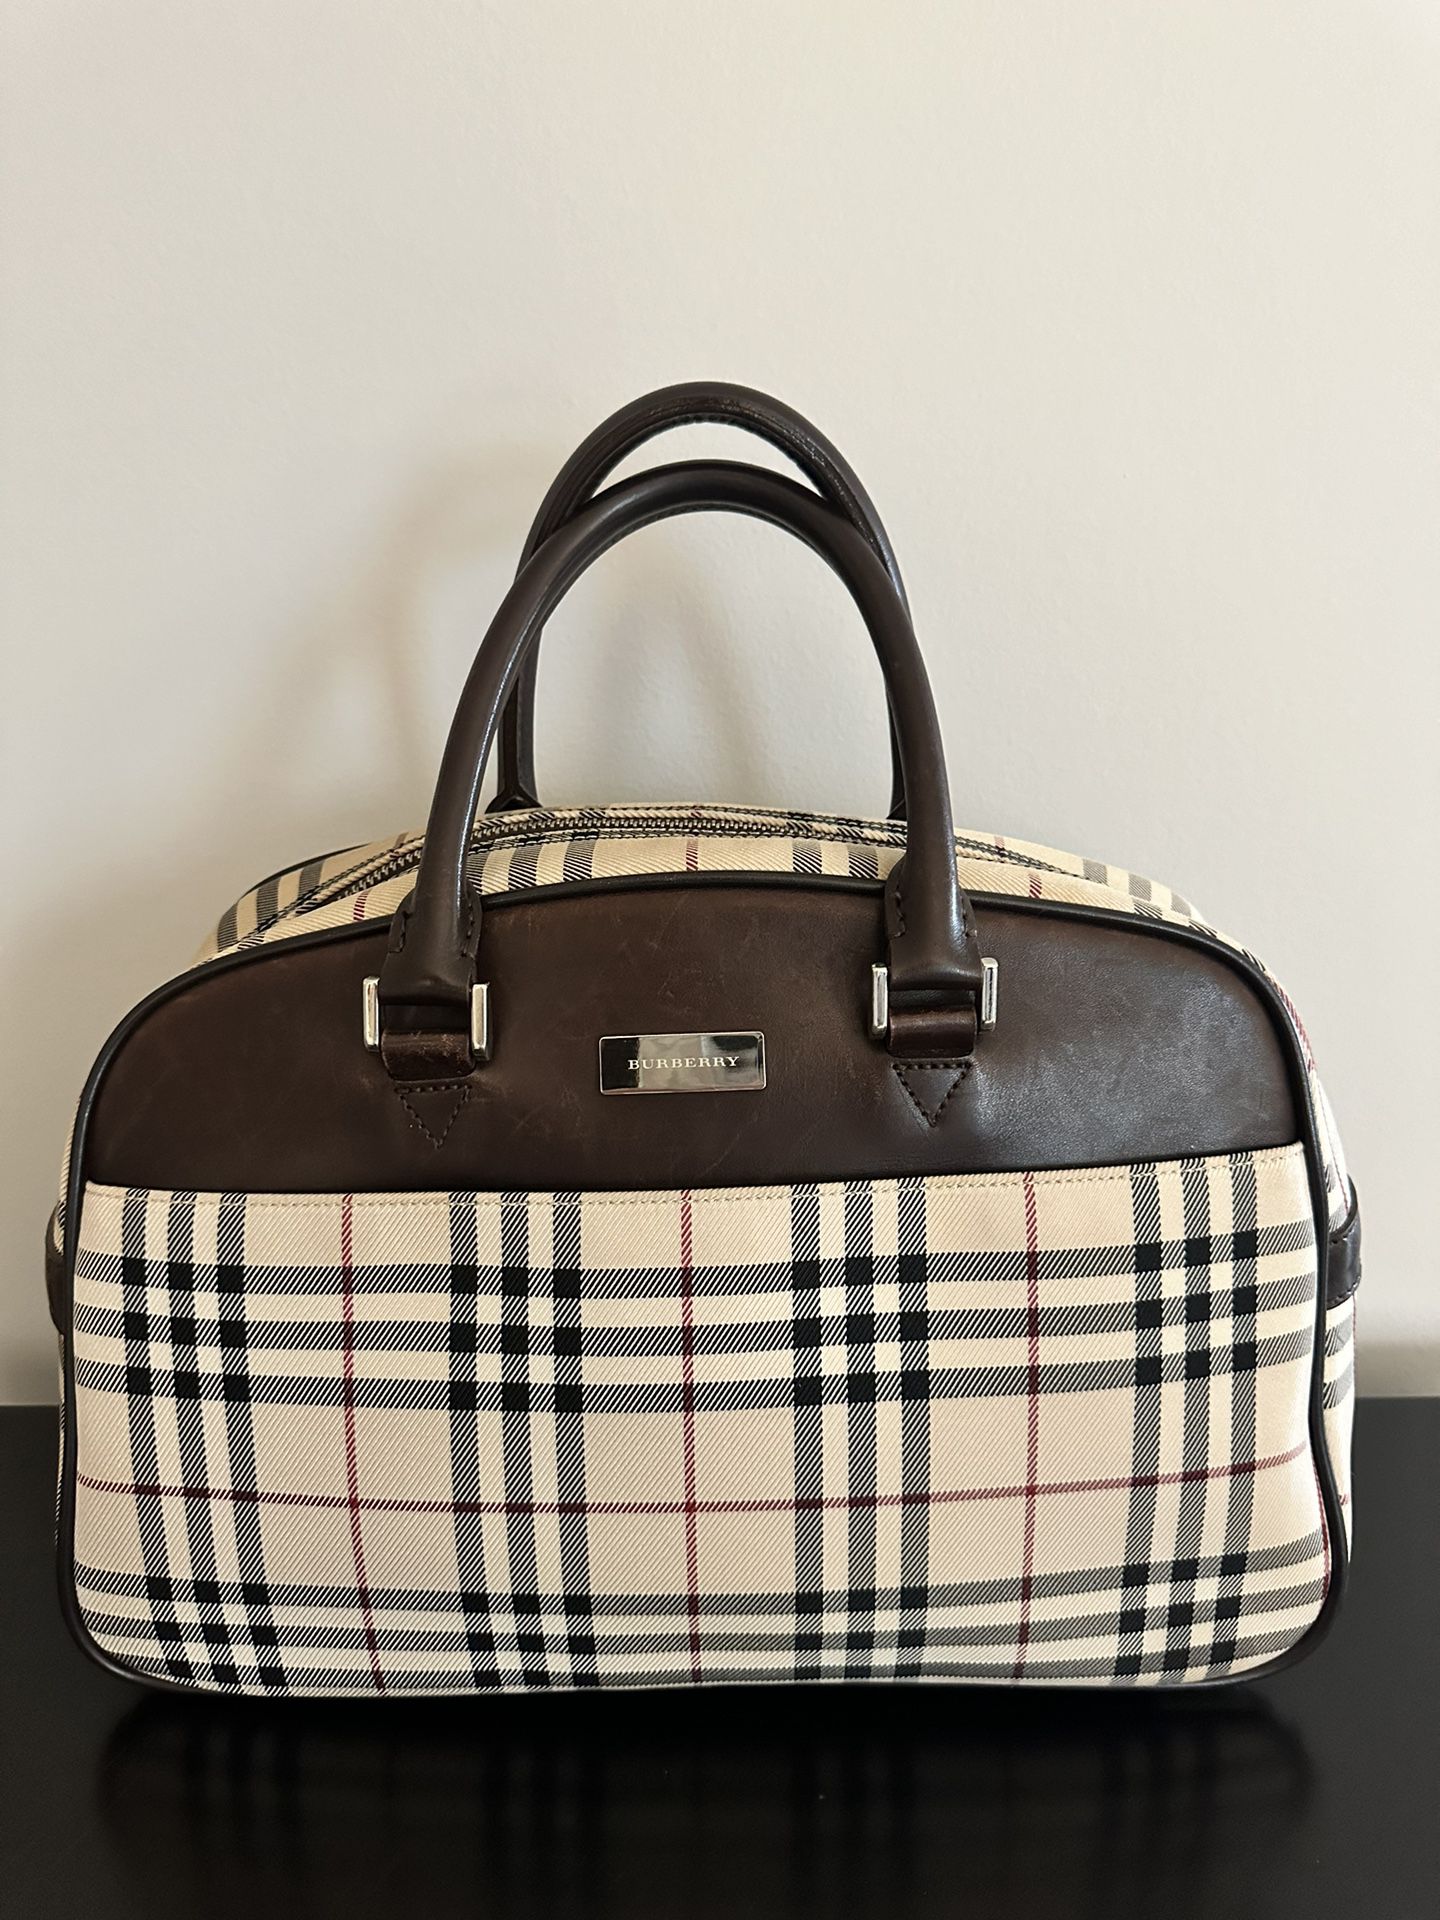 Authentic Burberry Handbag